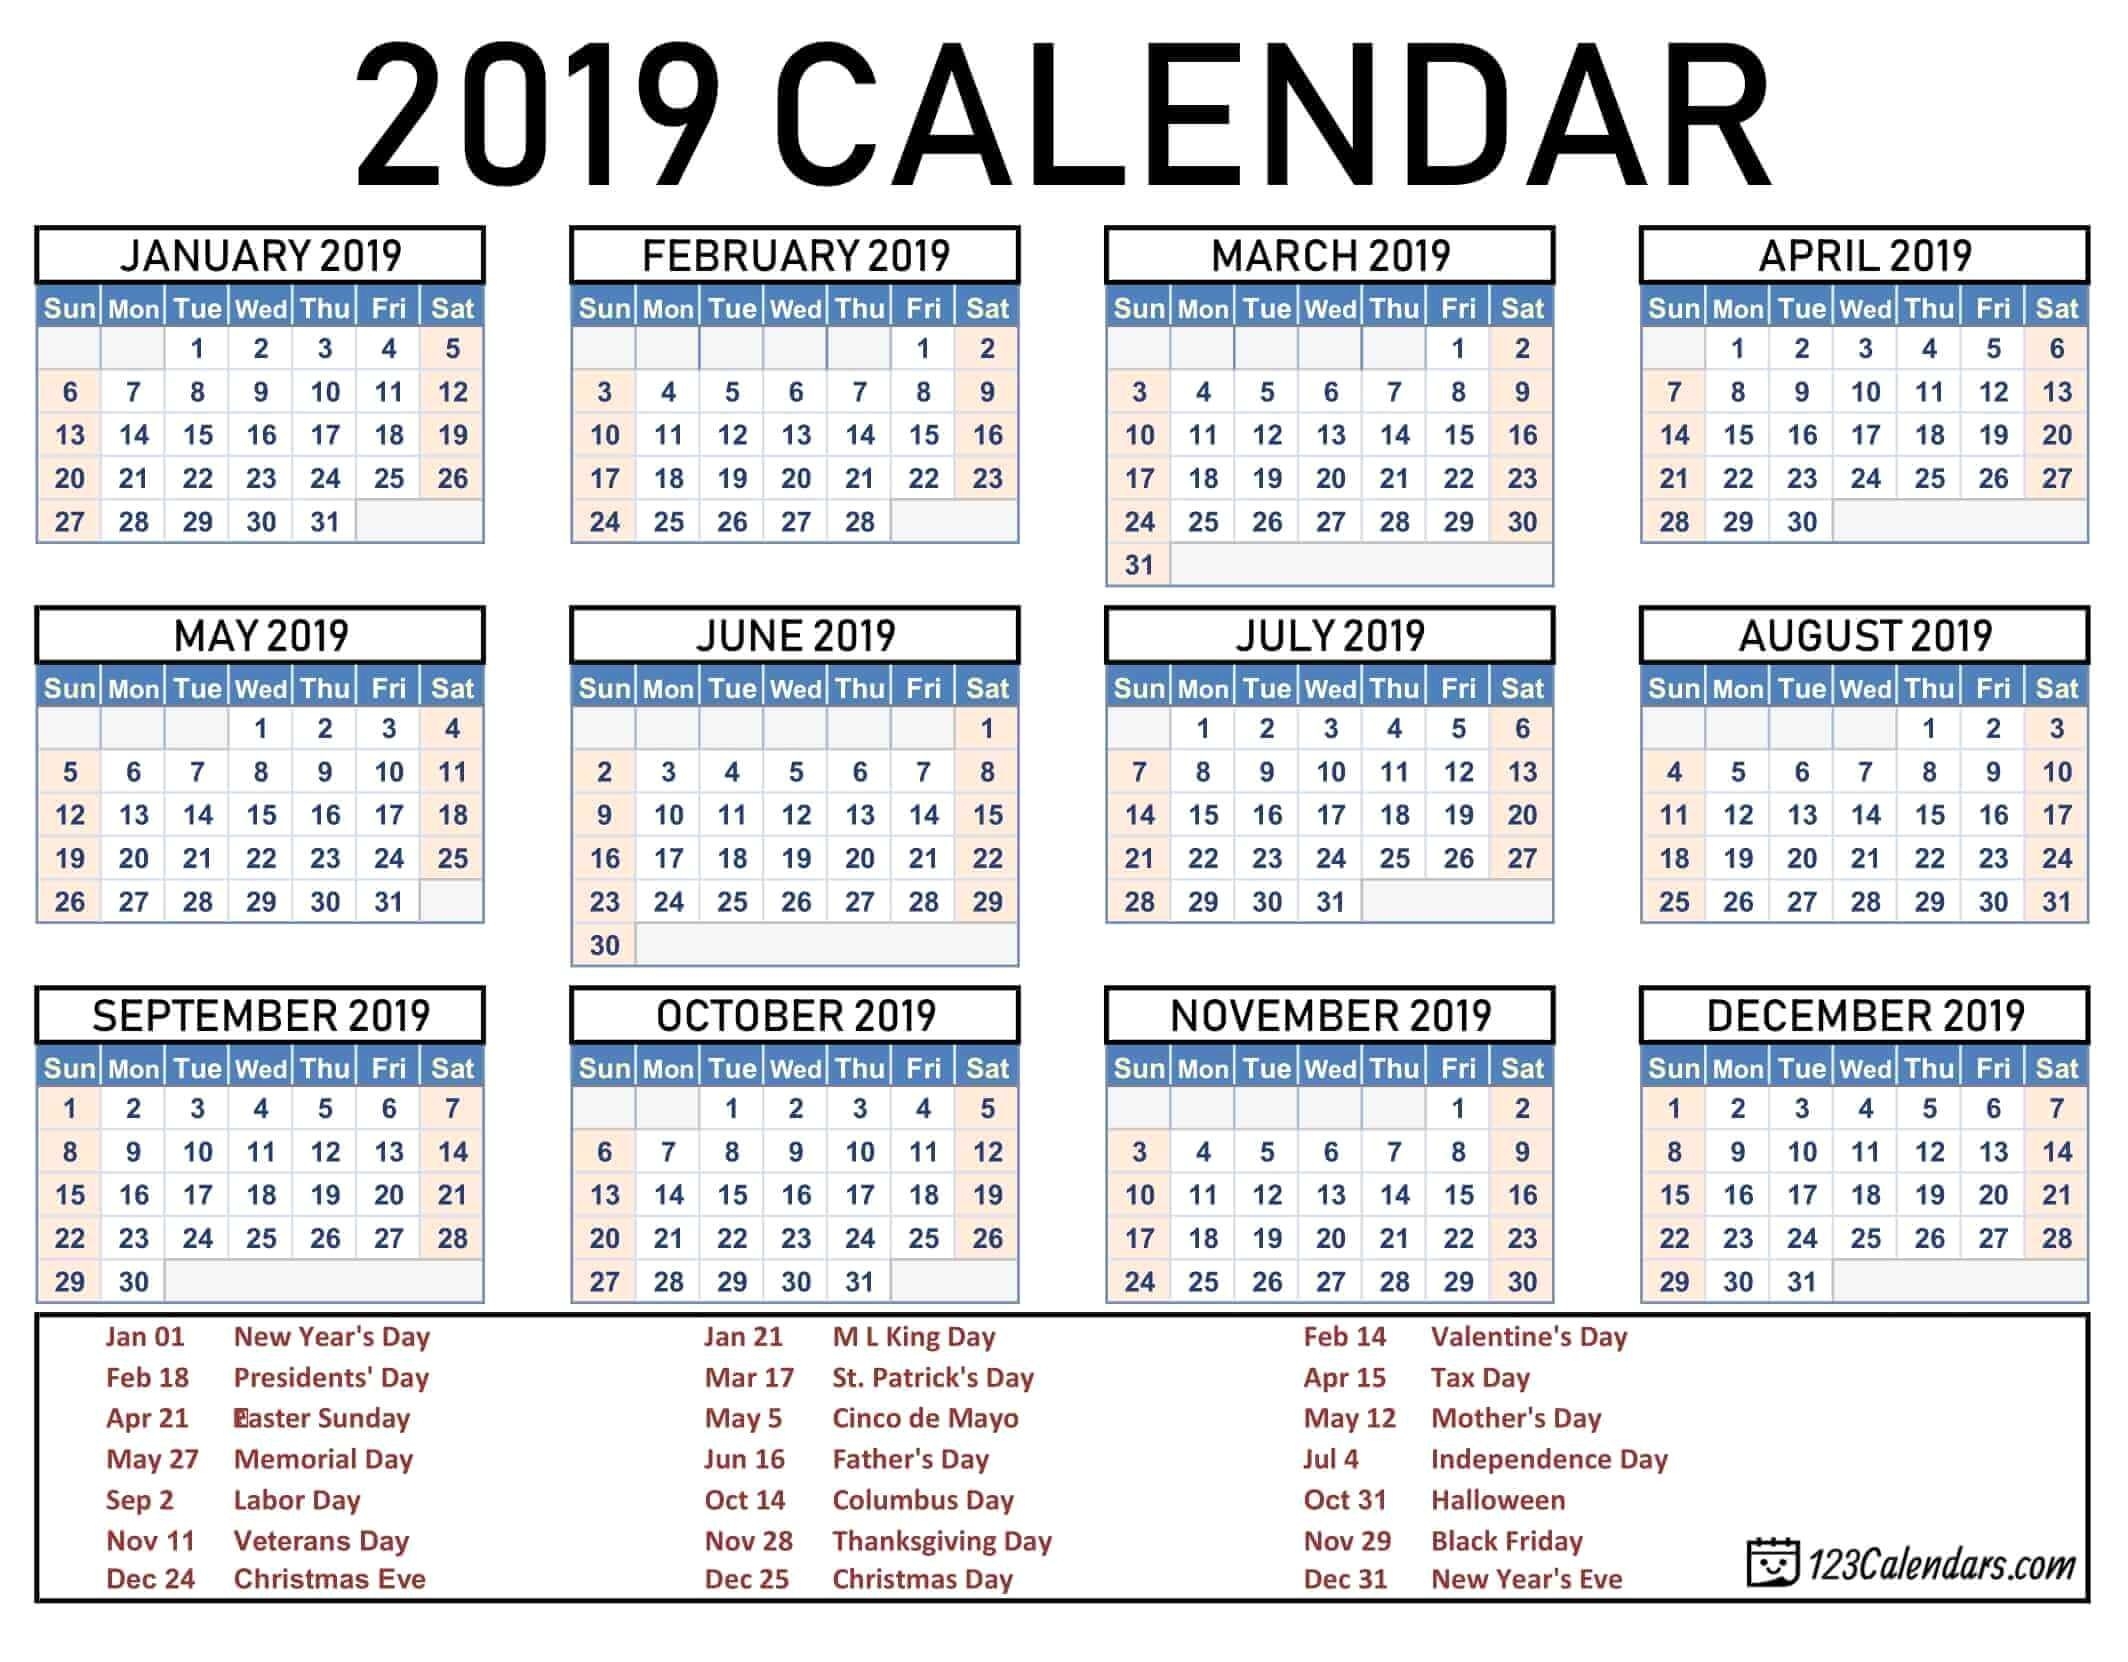 franklin township school calendar 2019-2020